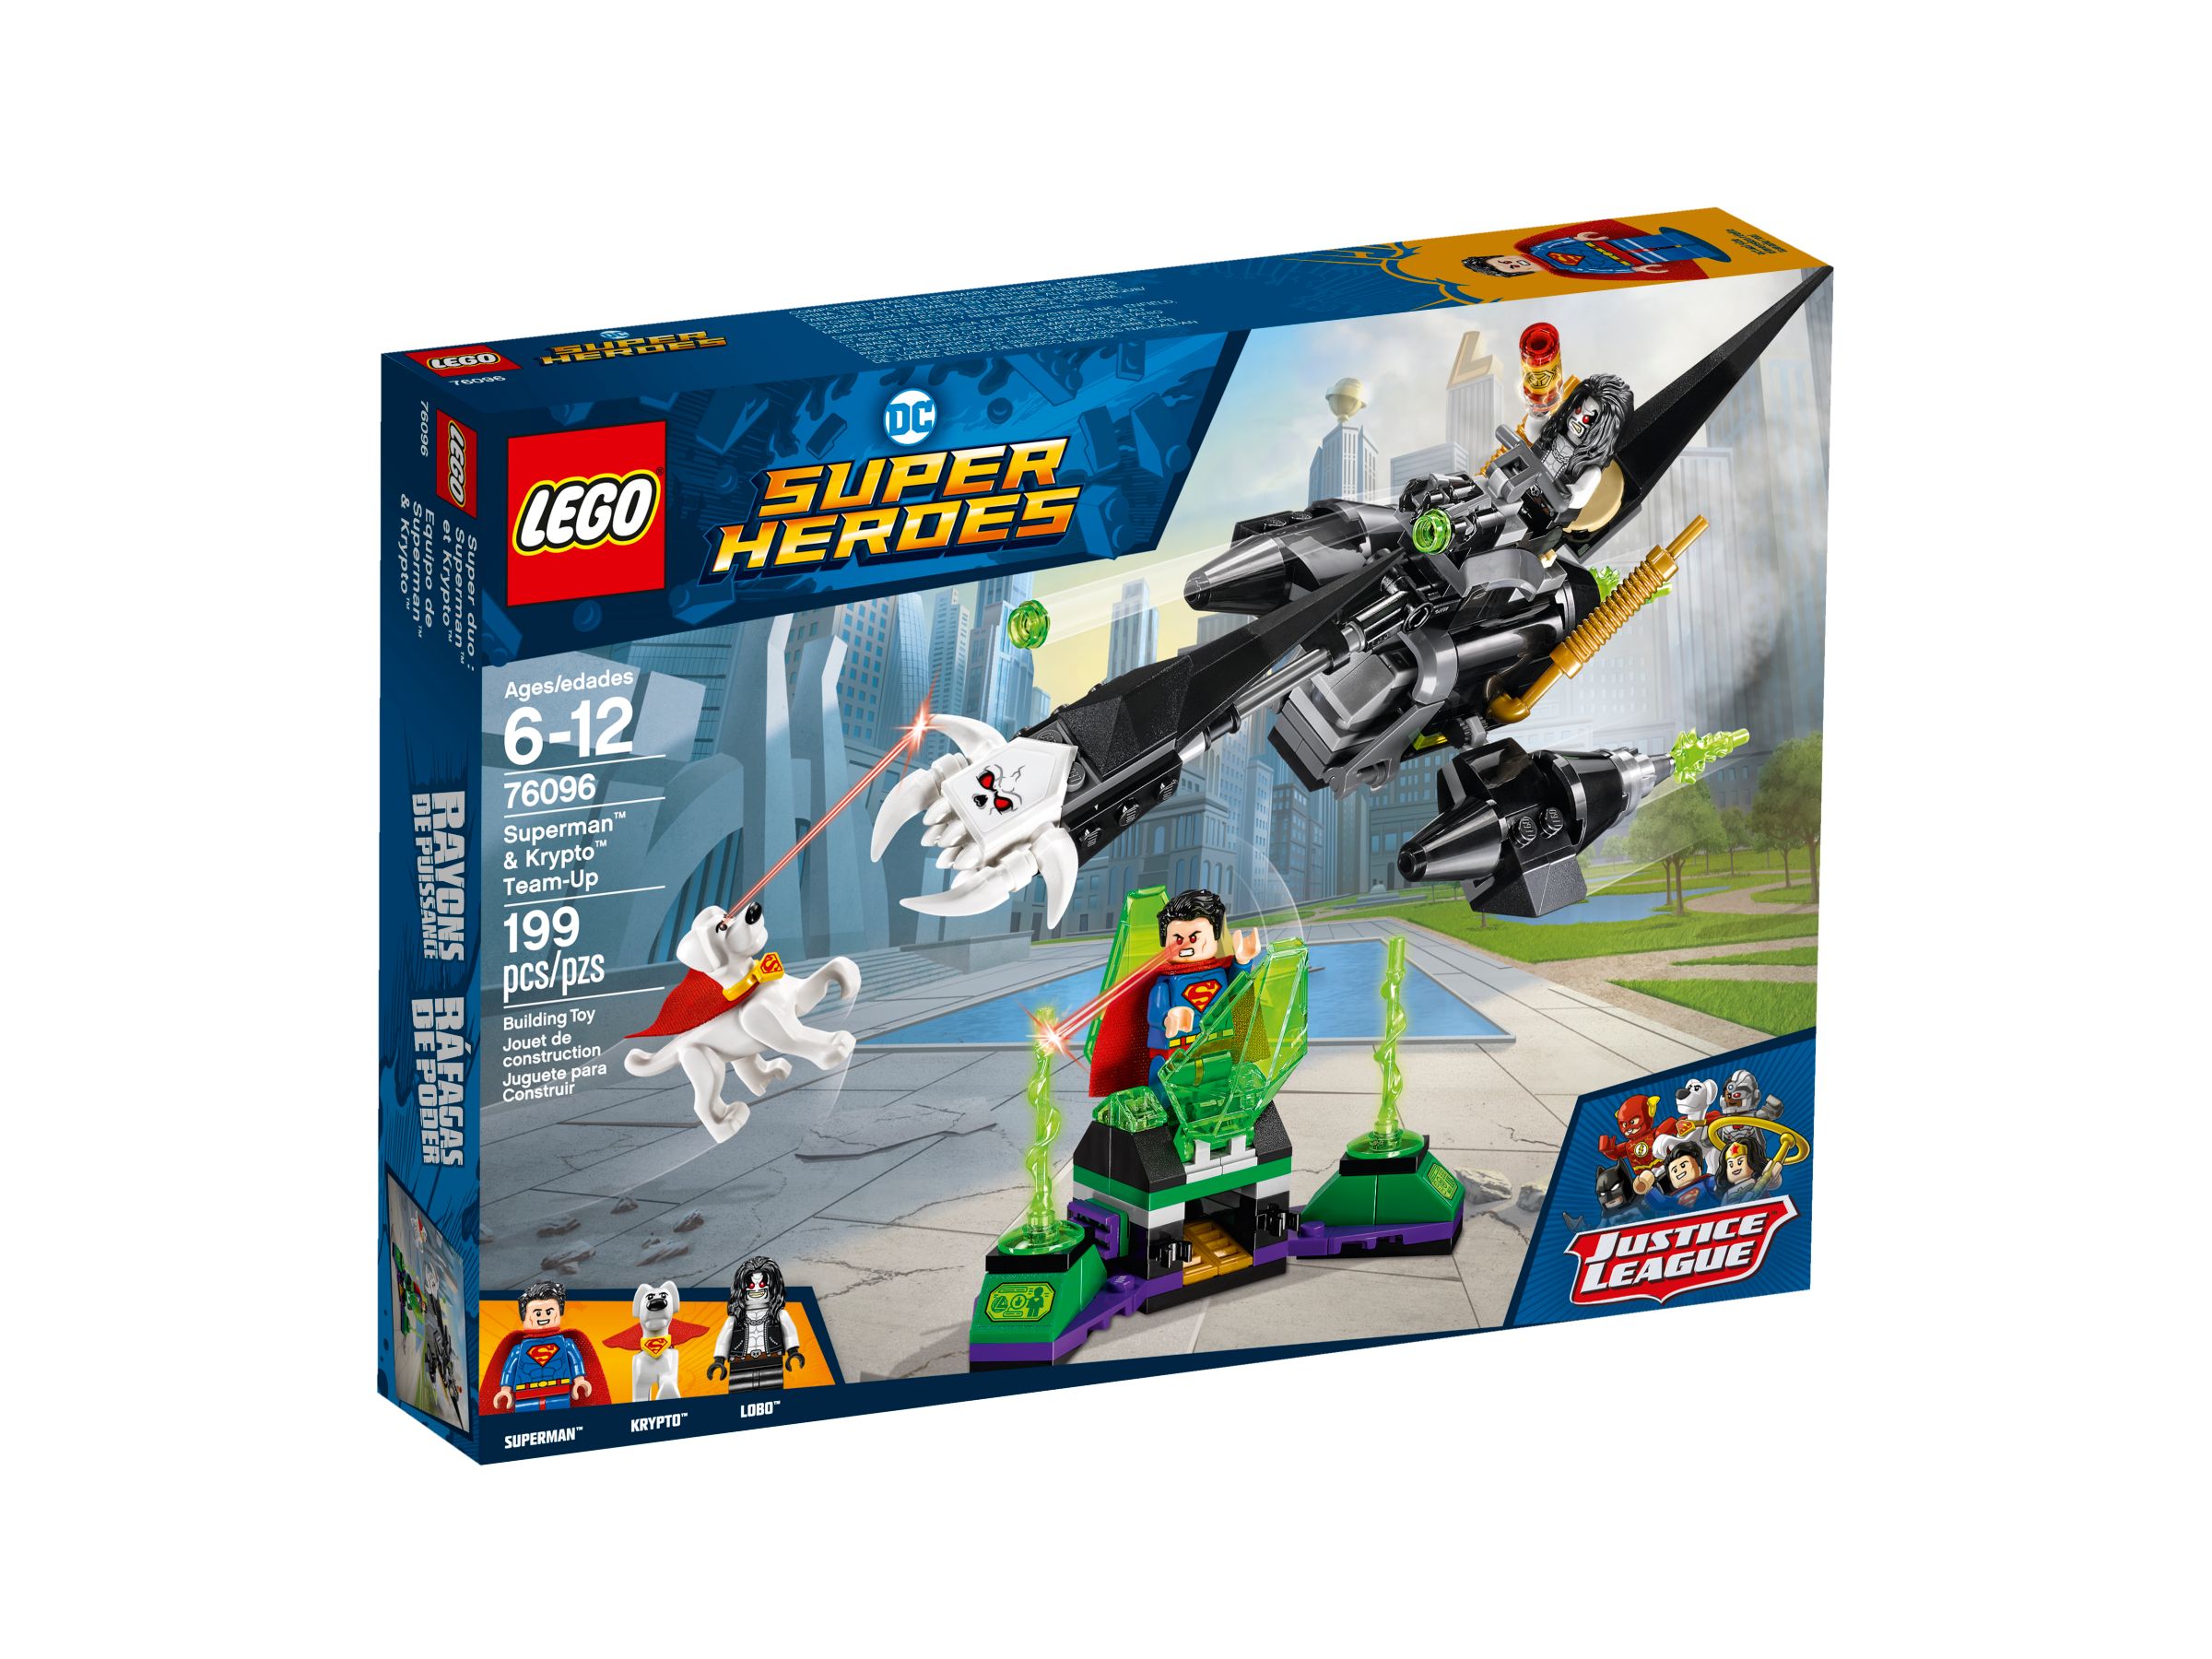 LEGO Super Heroes 76096 Superman & Krypto Team-Up LEGO_76096_alt1.jpg